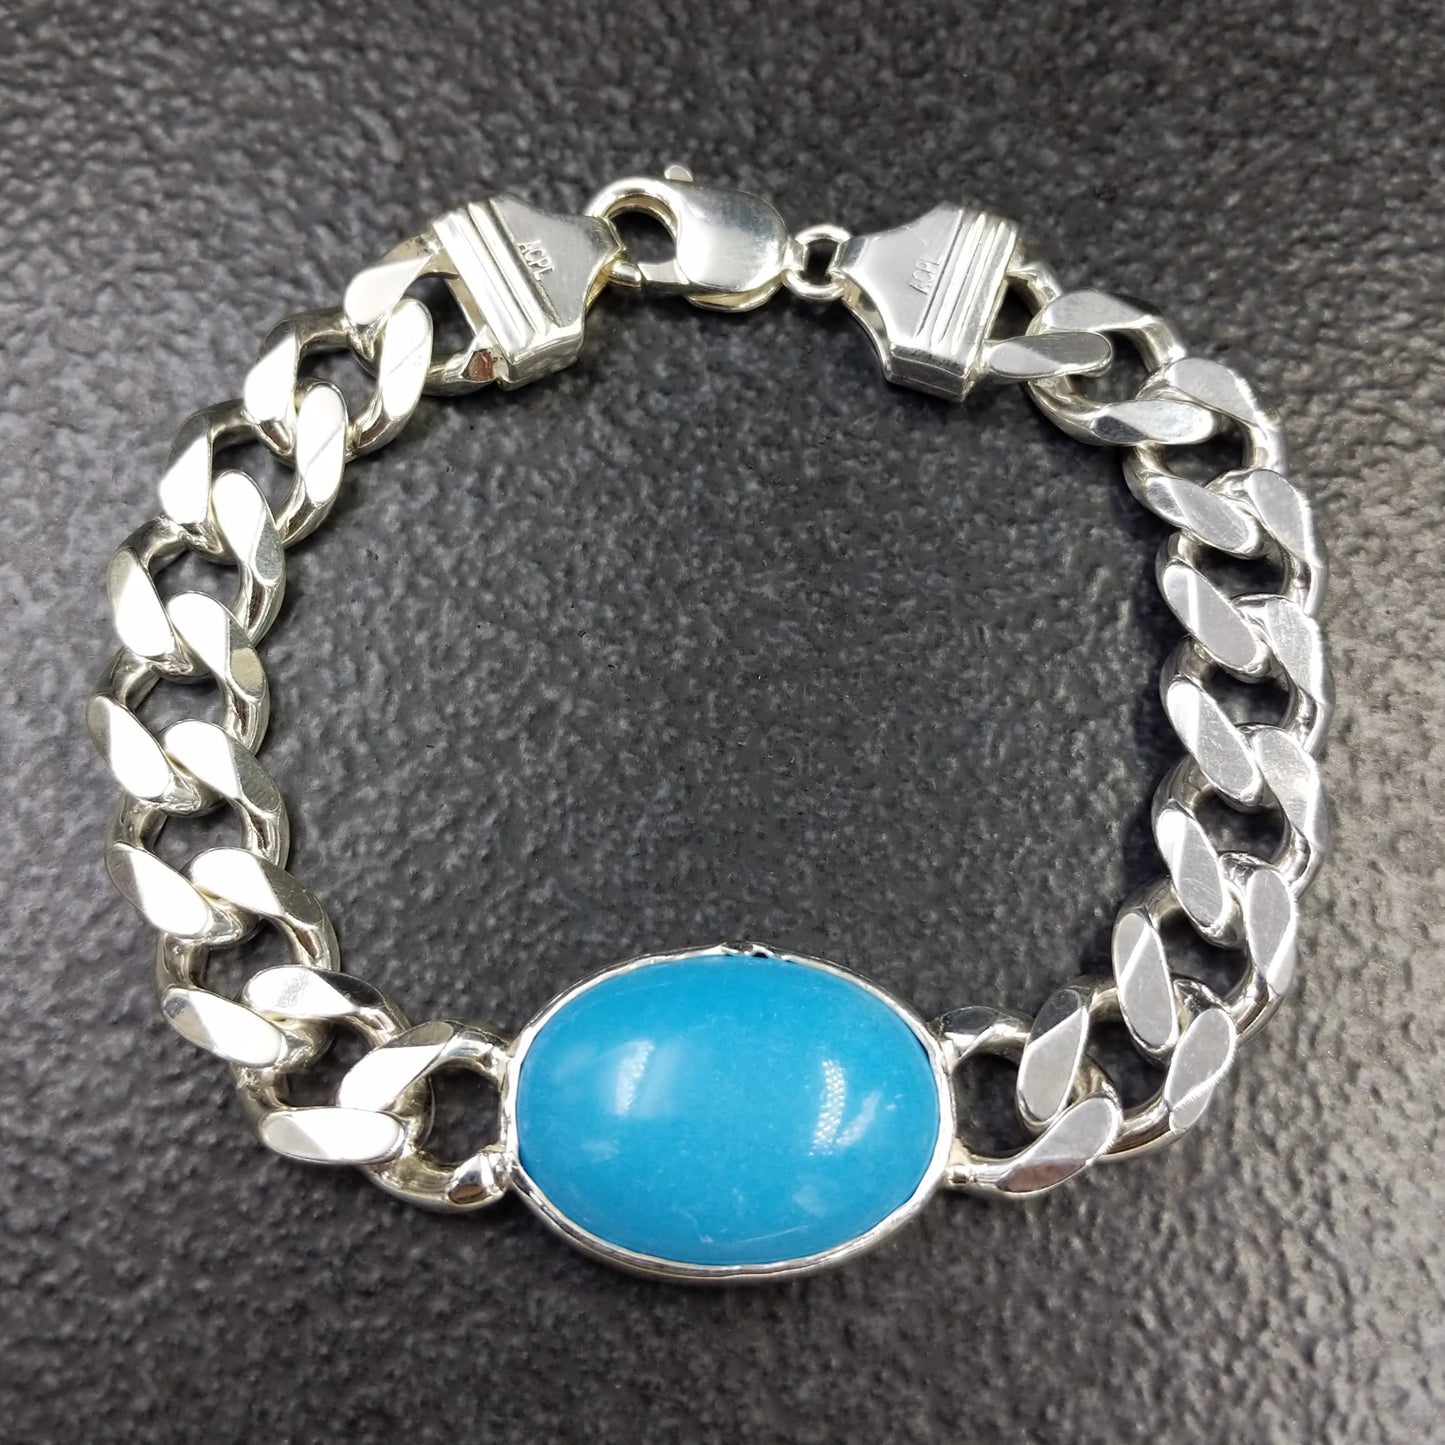 Men's Bracelet Turquoise - Thick Chain